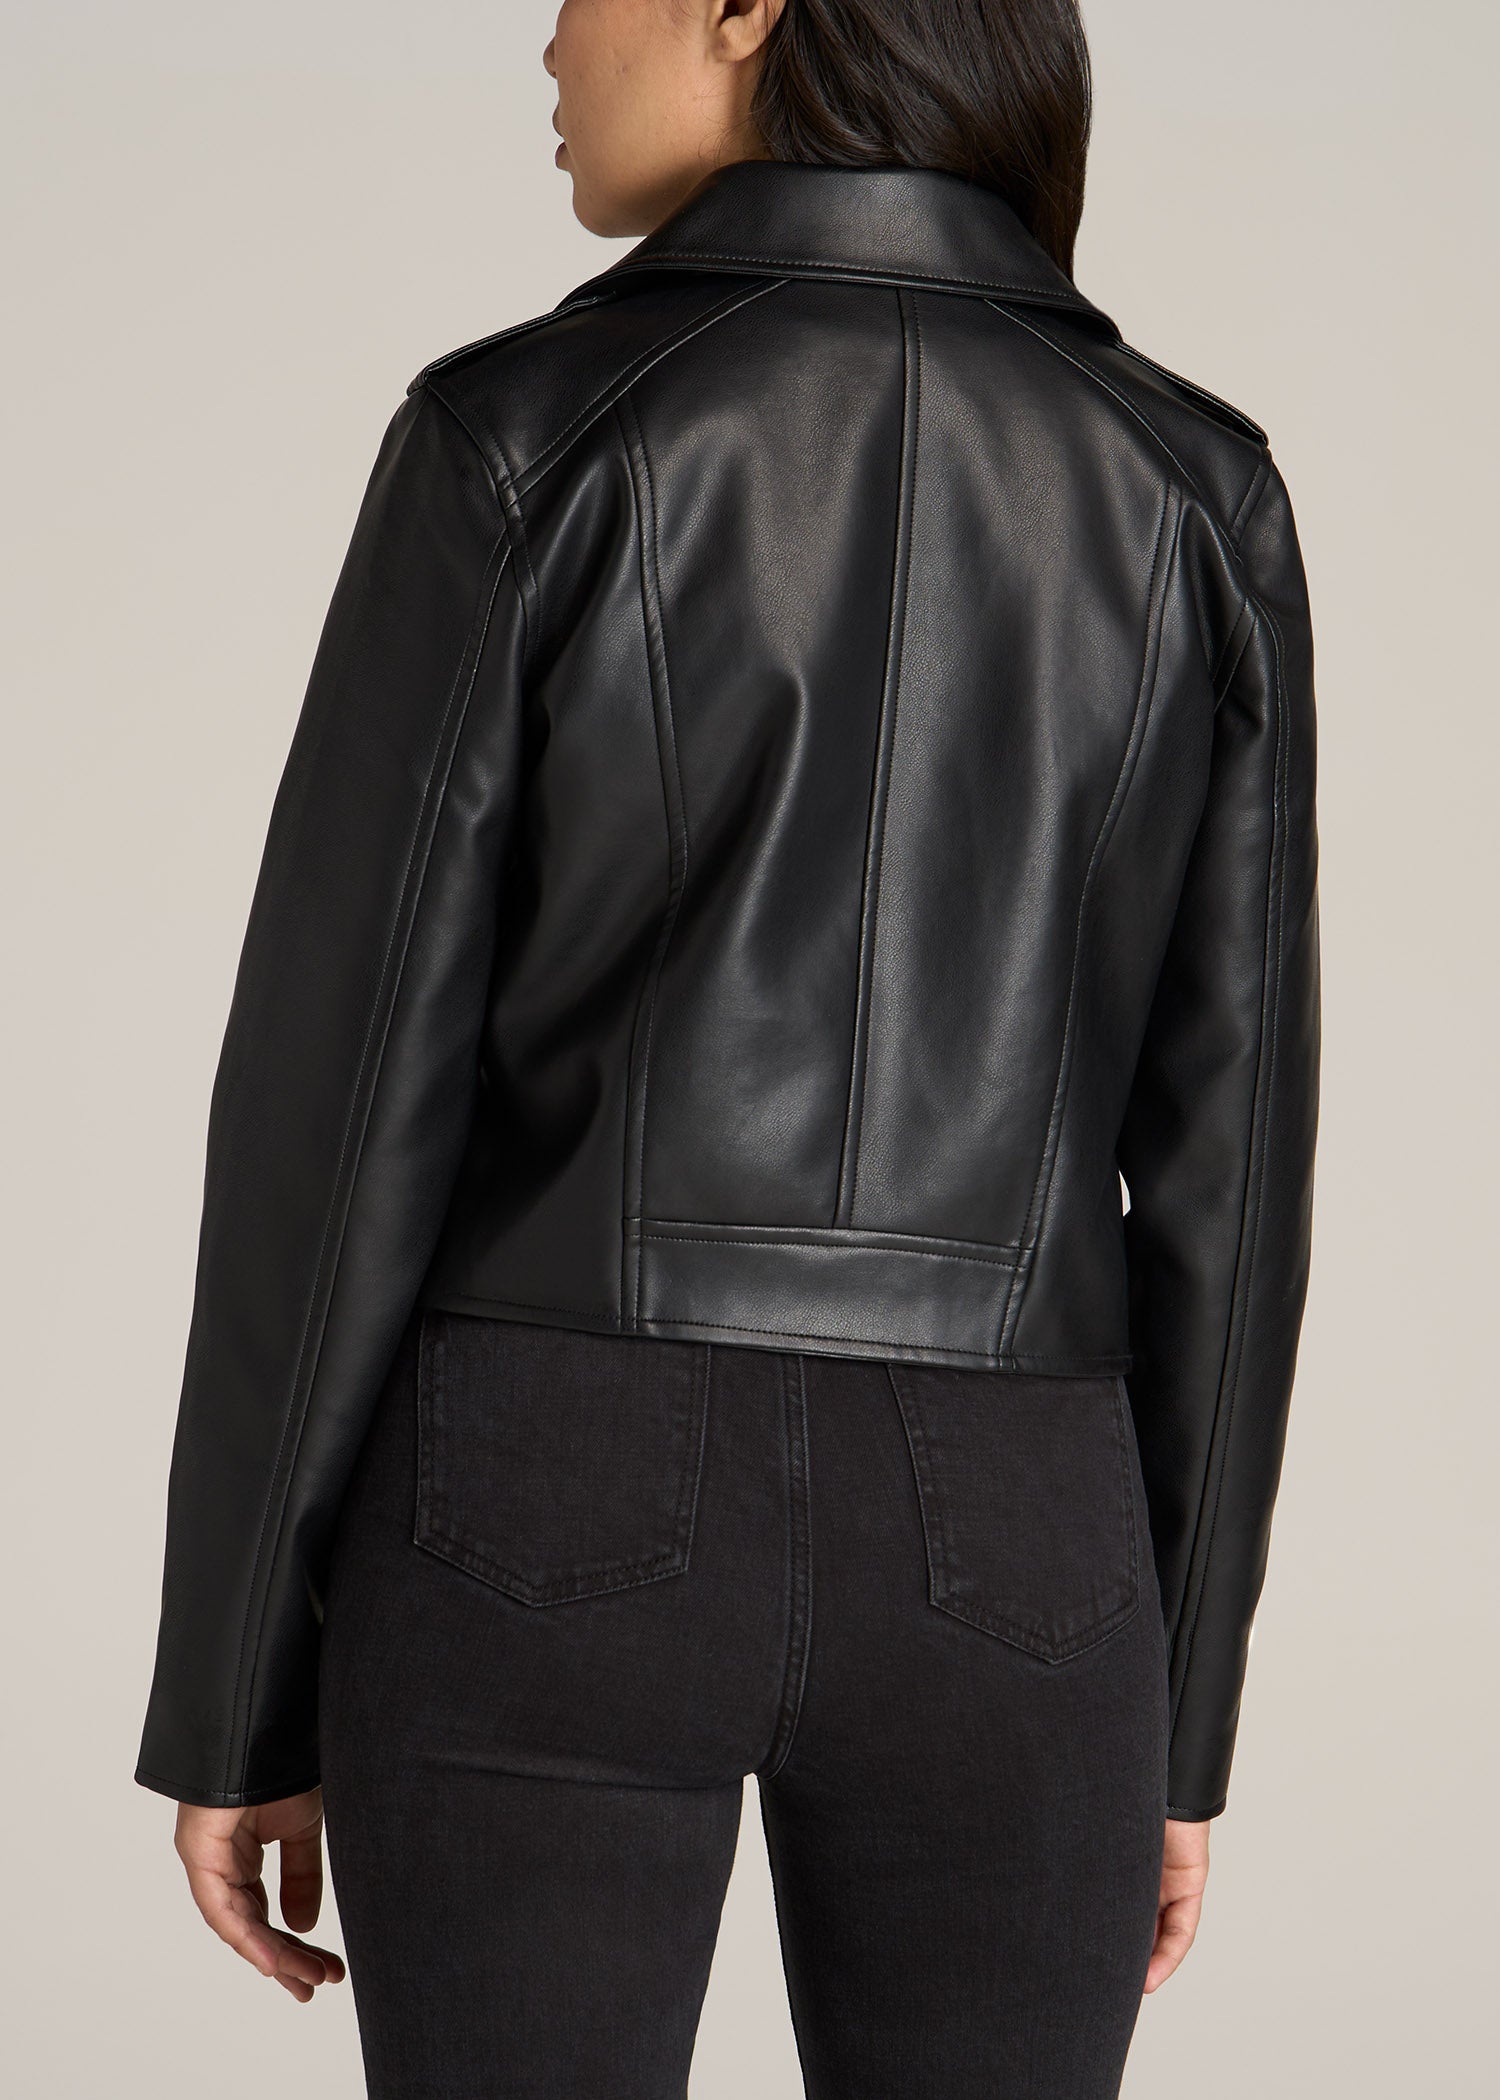 Women's 100% Leather Motorcycle Jacket